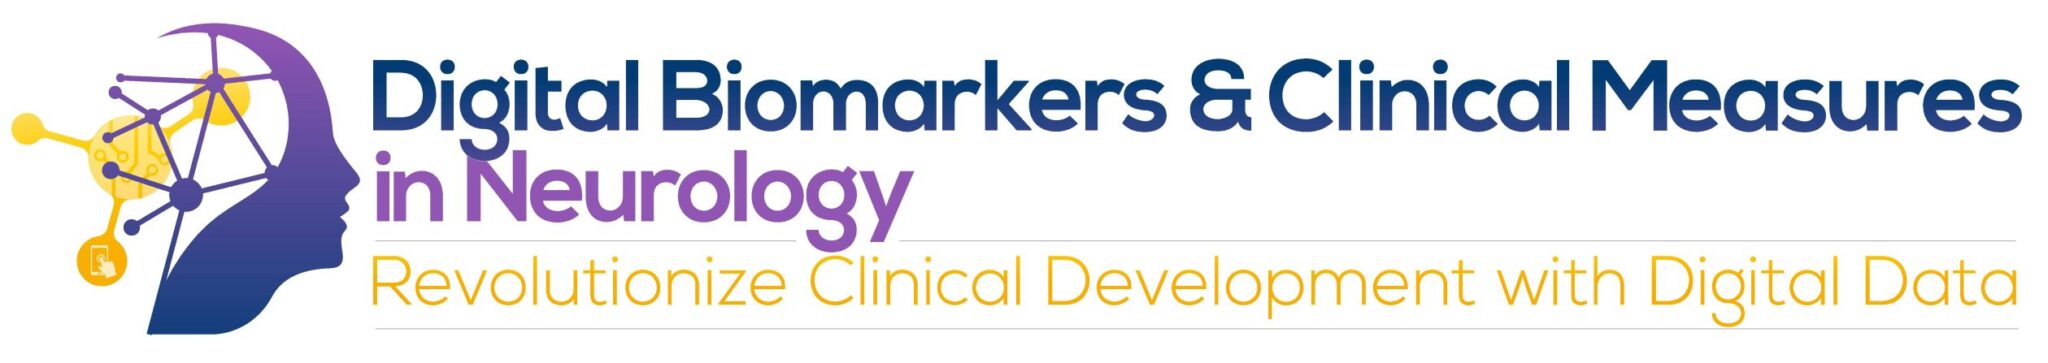 HW220216-29933-Digital-Biomarkers-Clinical-Measures-in-Neuroscience-Summit-logo-FINAL-3-2048x363